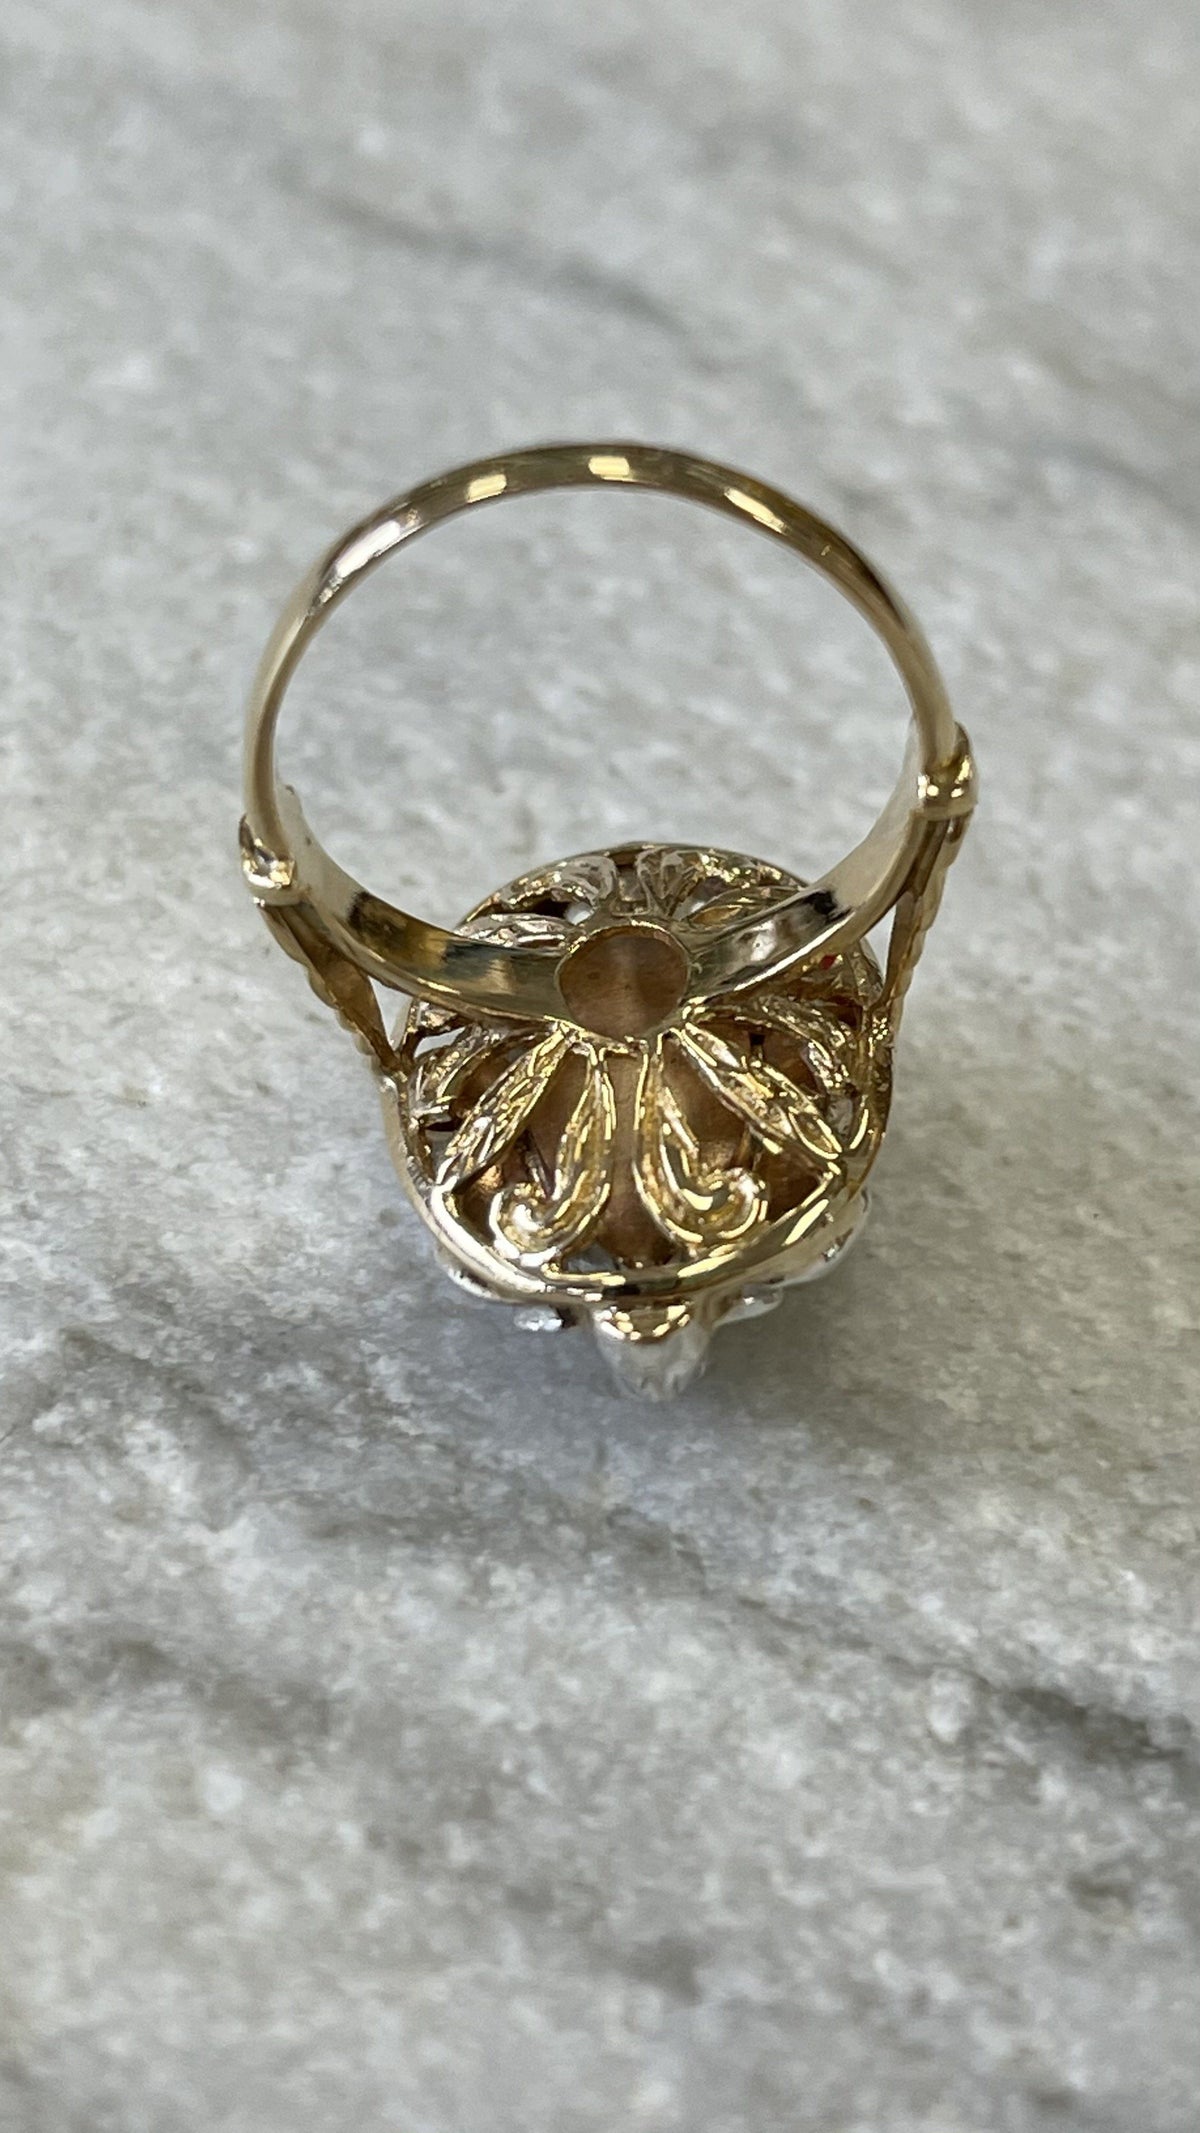 Ring - 19TH CENTURY 14K GEORGIAN EMERALD AND DIAMOND RING